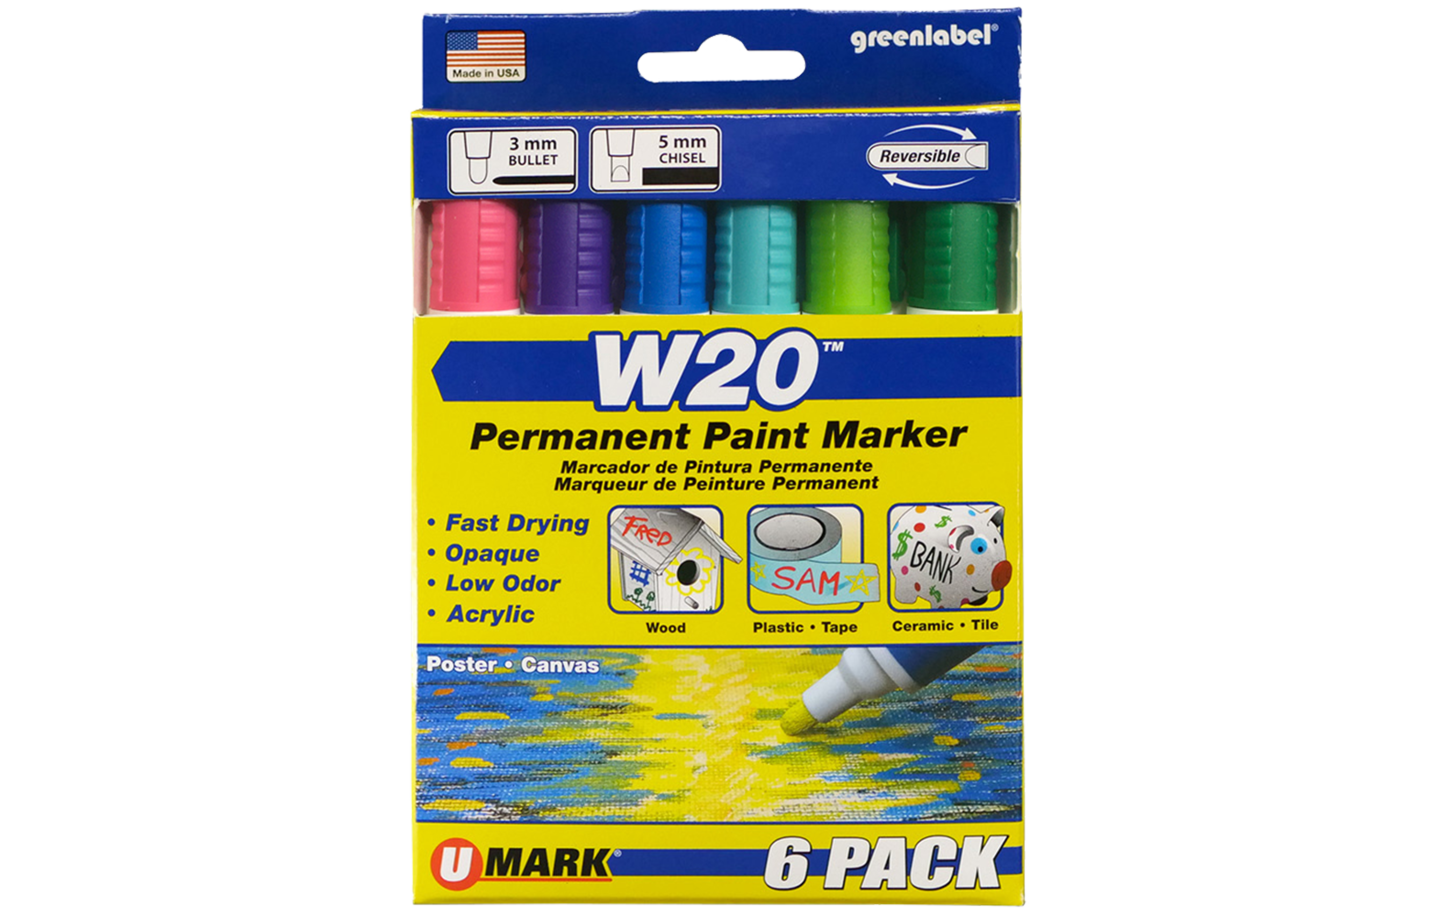 W20 Permanent Paint Marker 6 Pack - 1 ea. Pink, Dark Purple, Dark Blue, Teal, Green and Dark Green